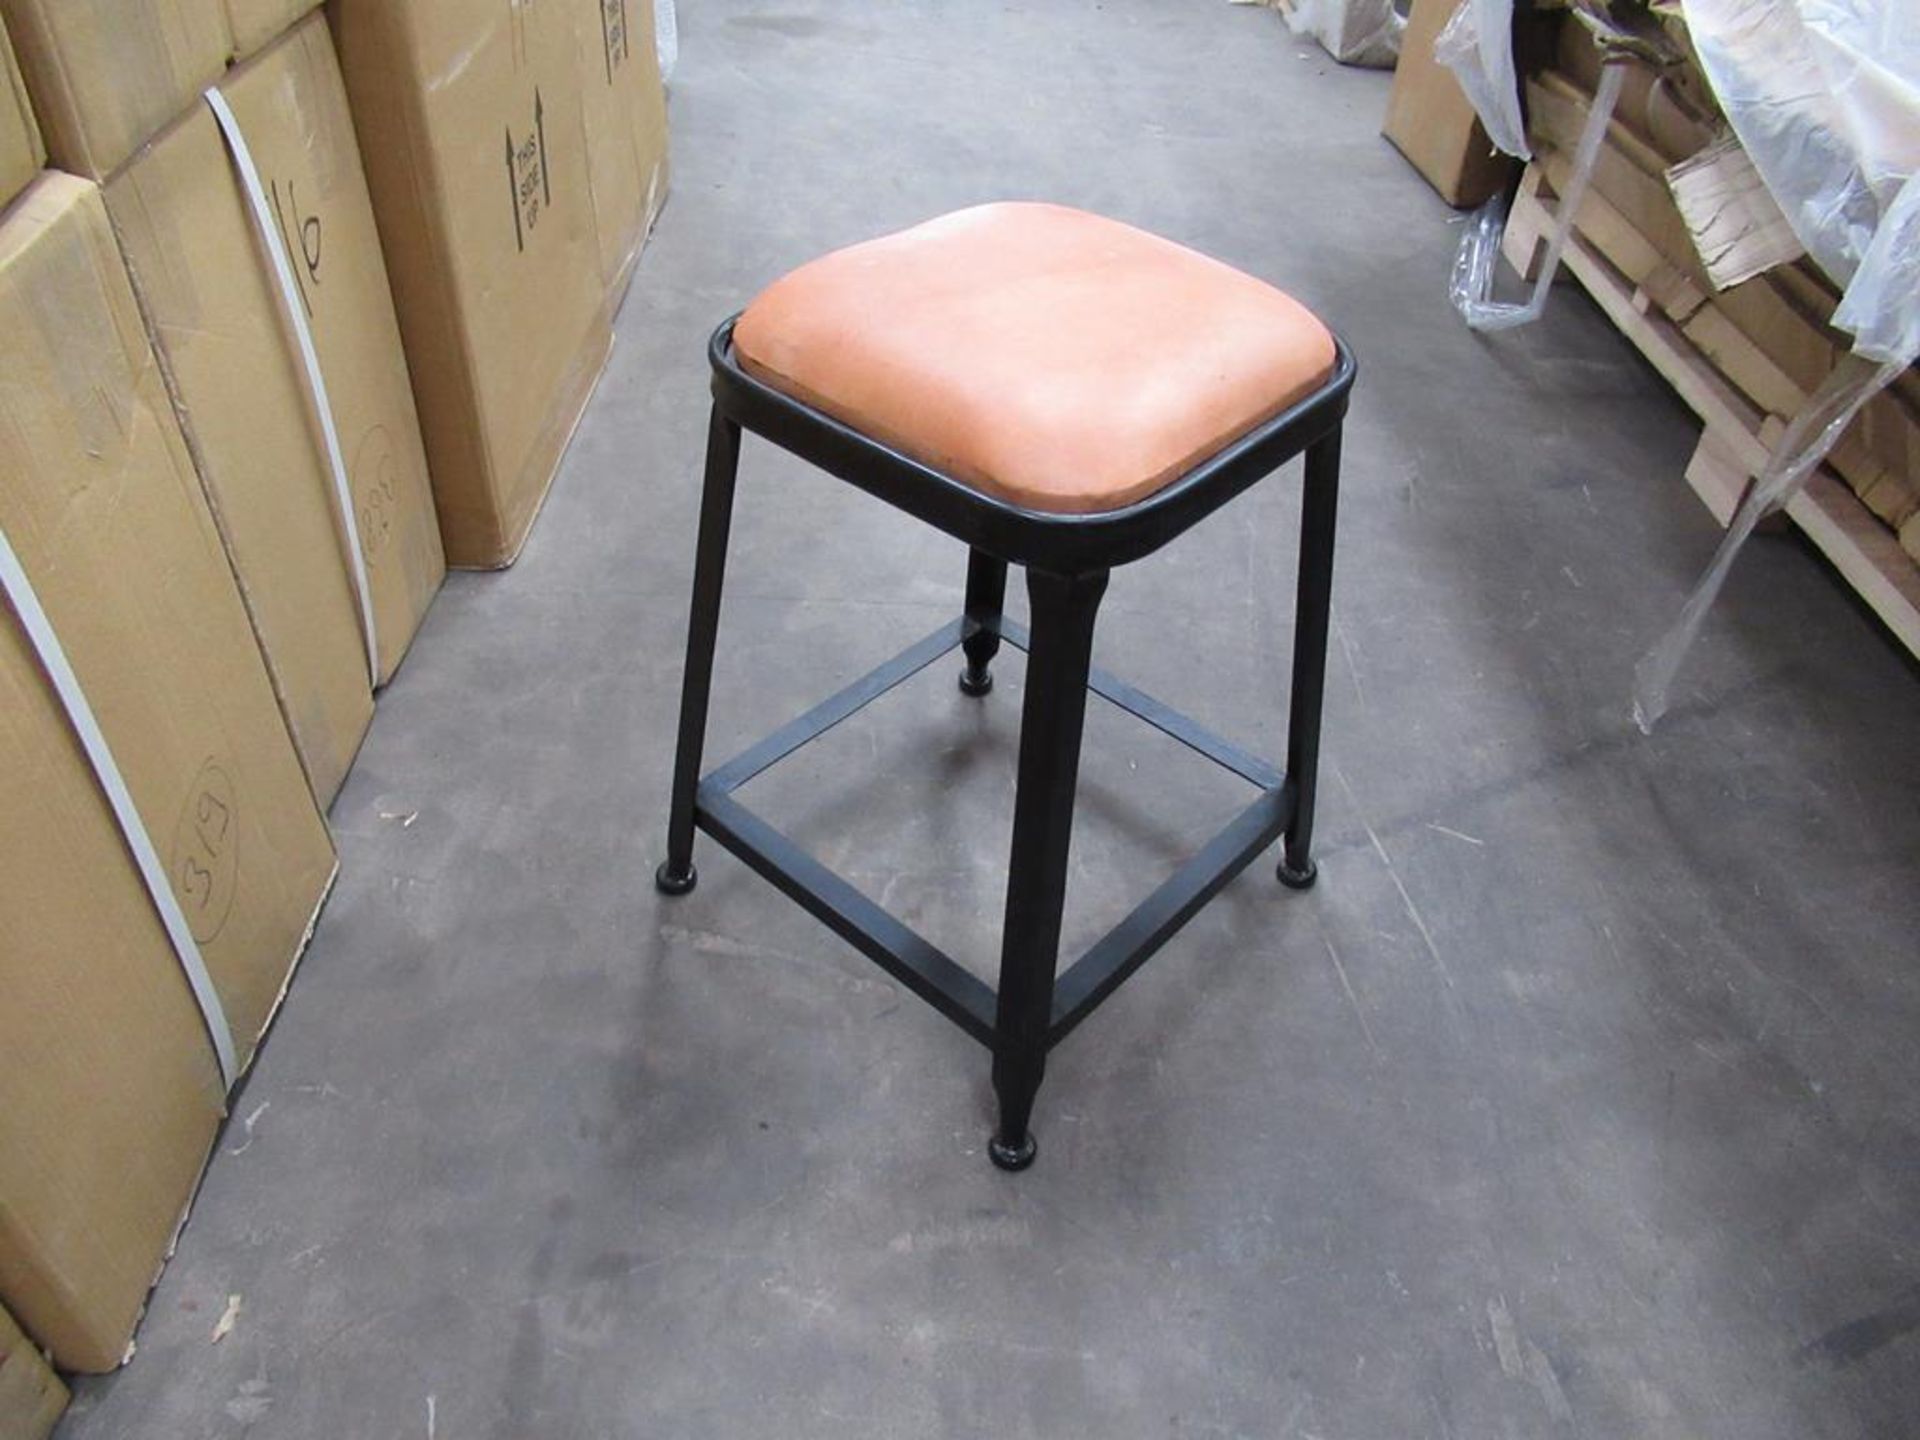 4 x UPH low stools